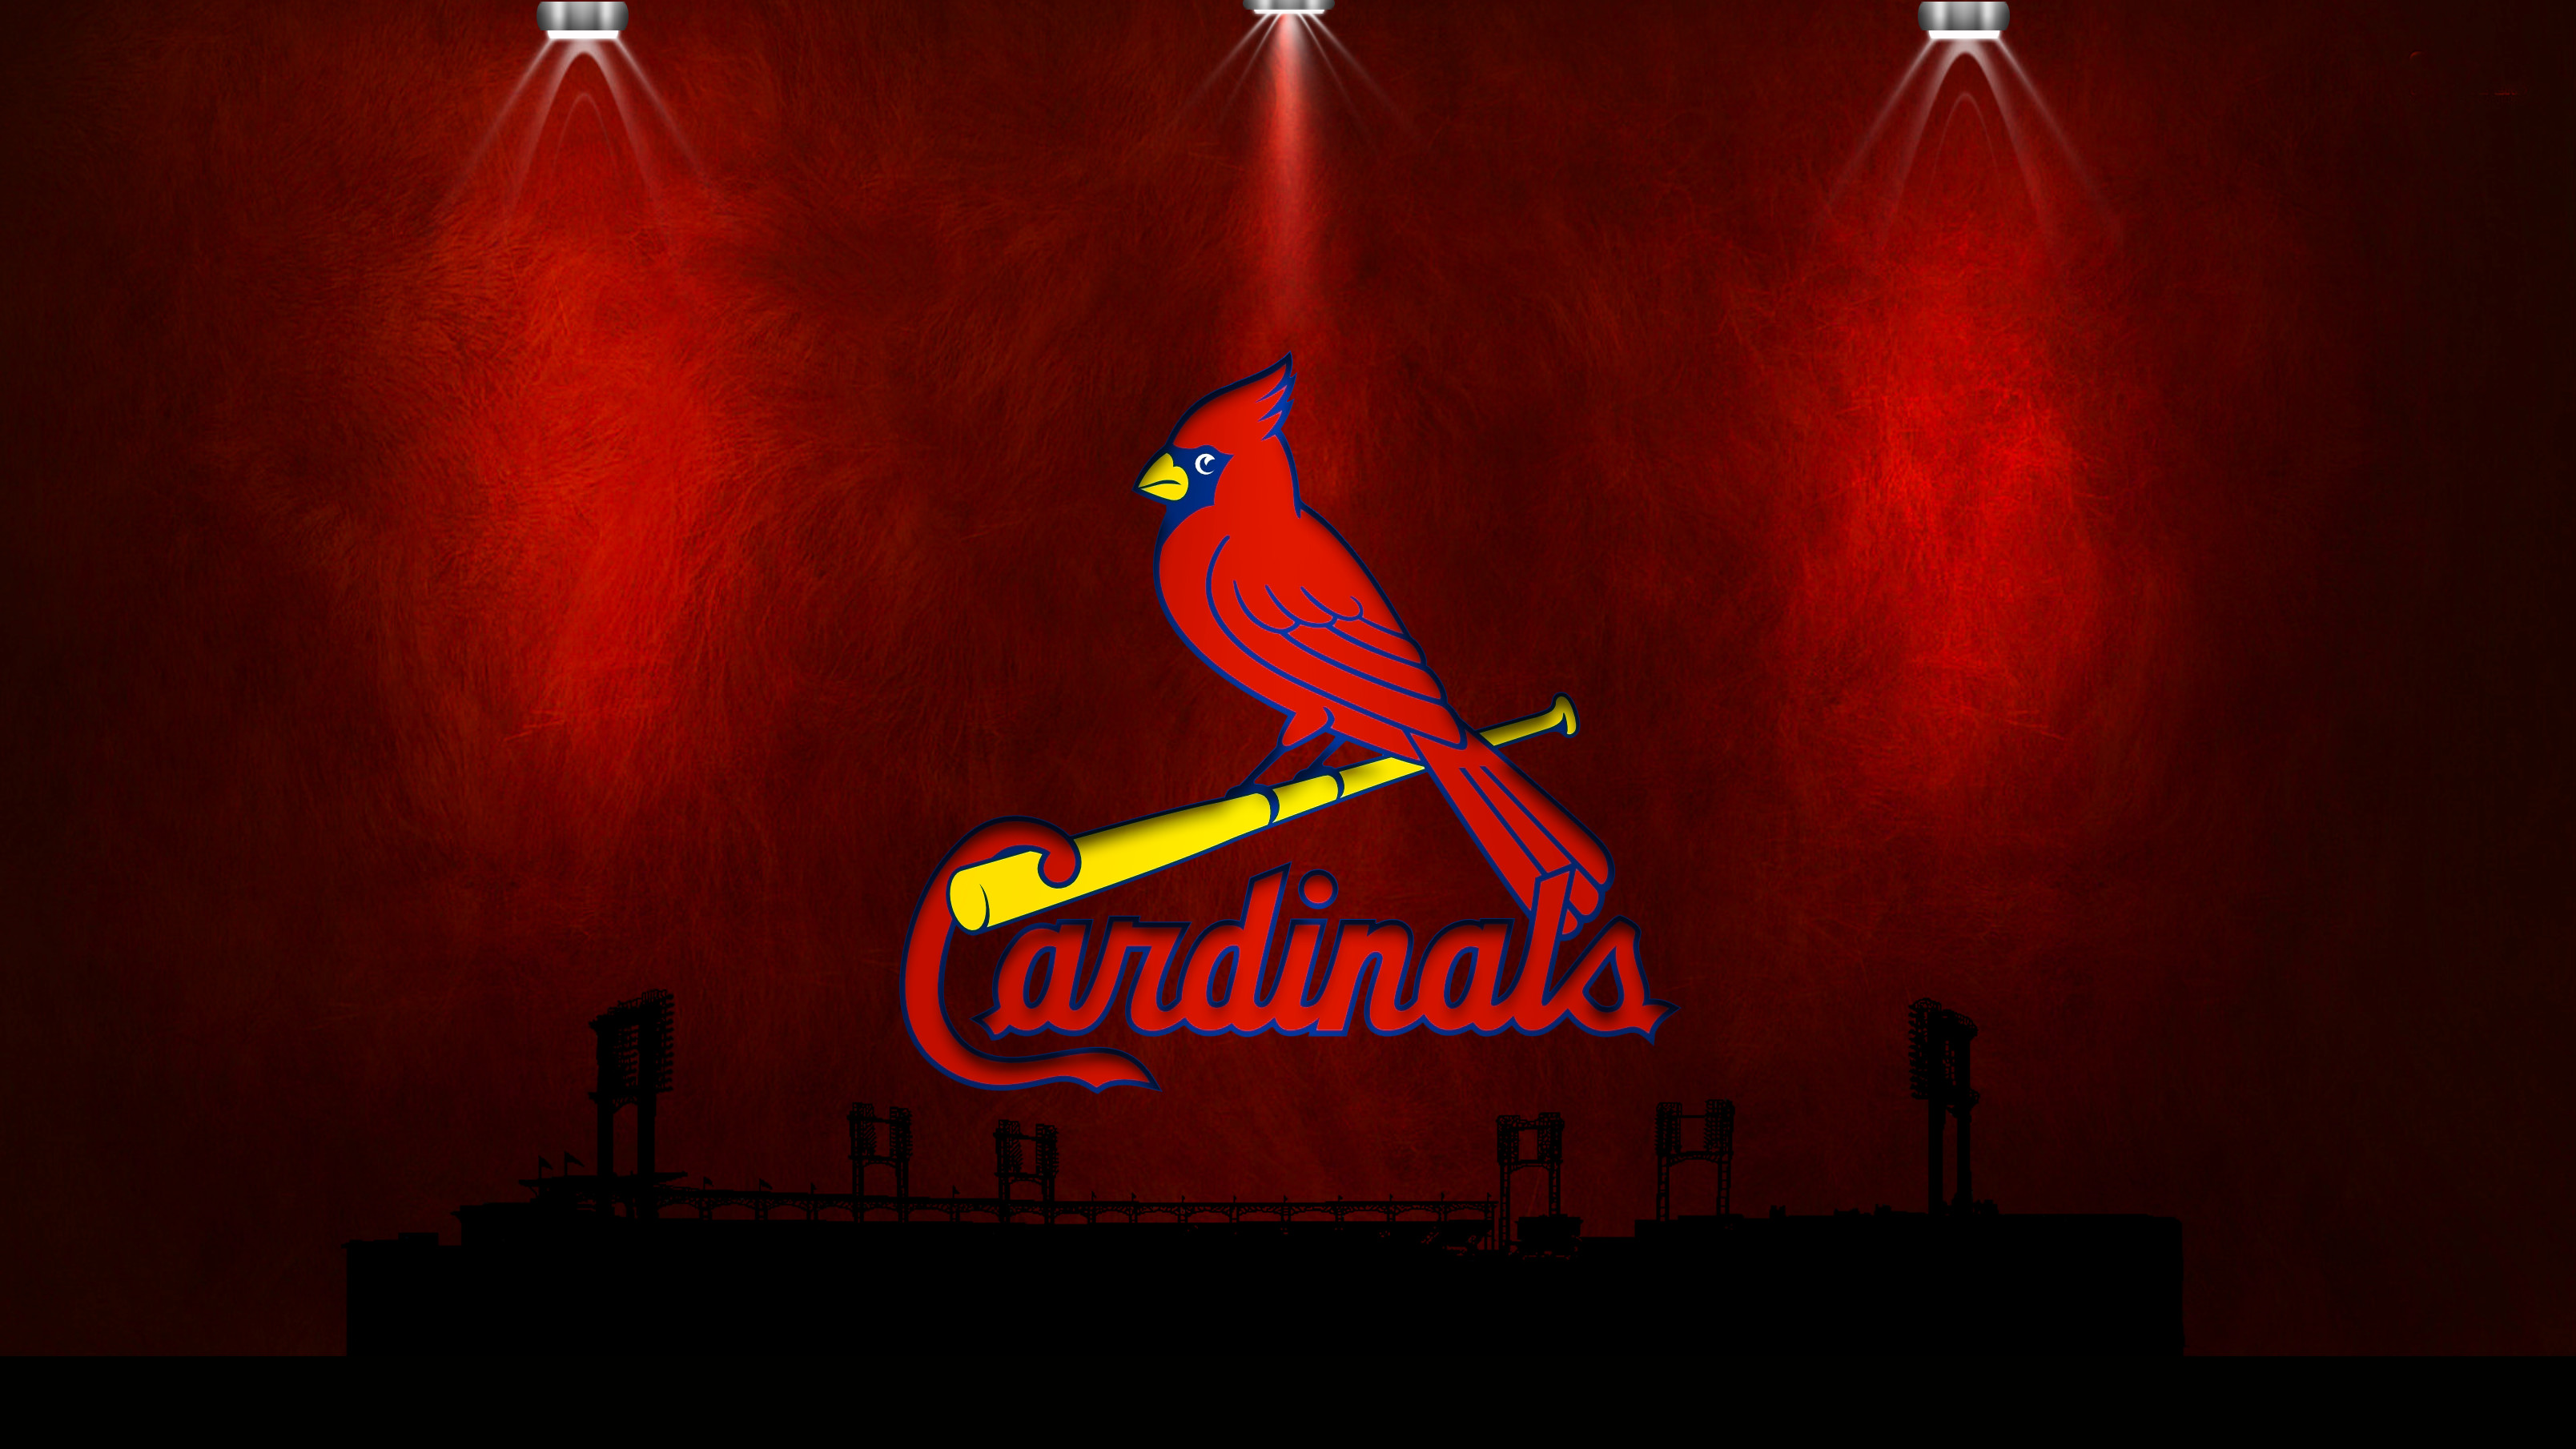 St Louis Cardinals 1992  St louis cardinals baseball Stl cardinals  baseball Cardinals wallpaper